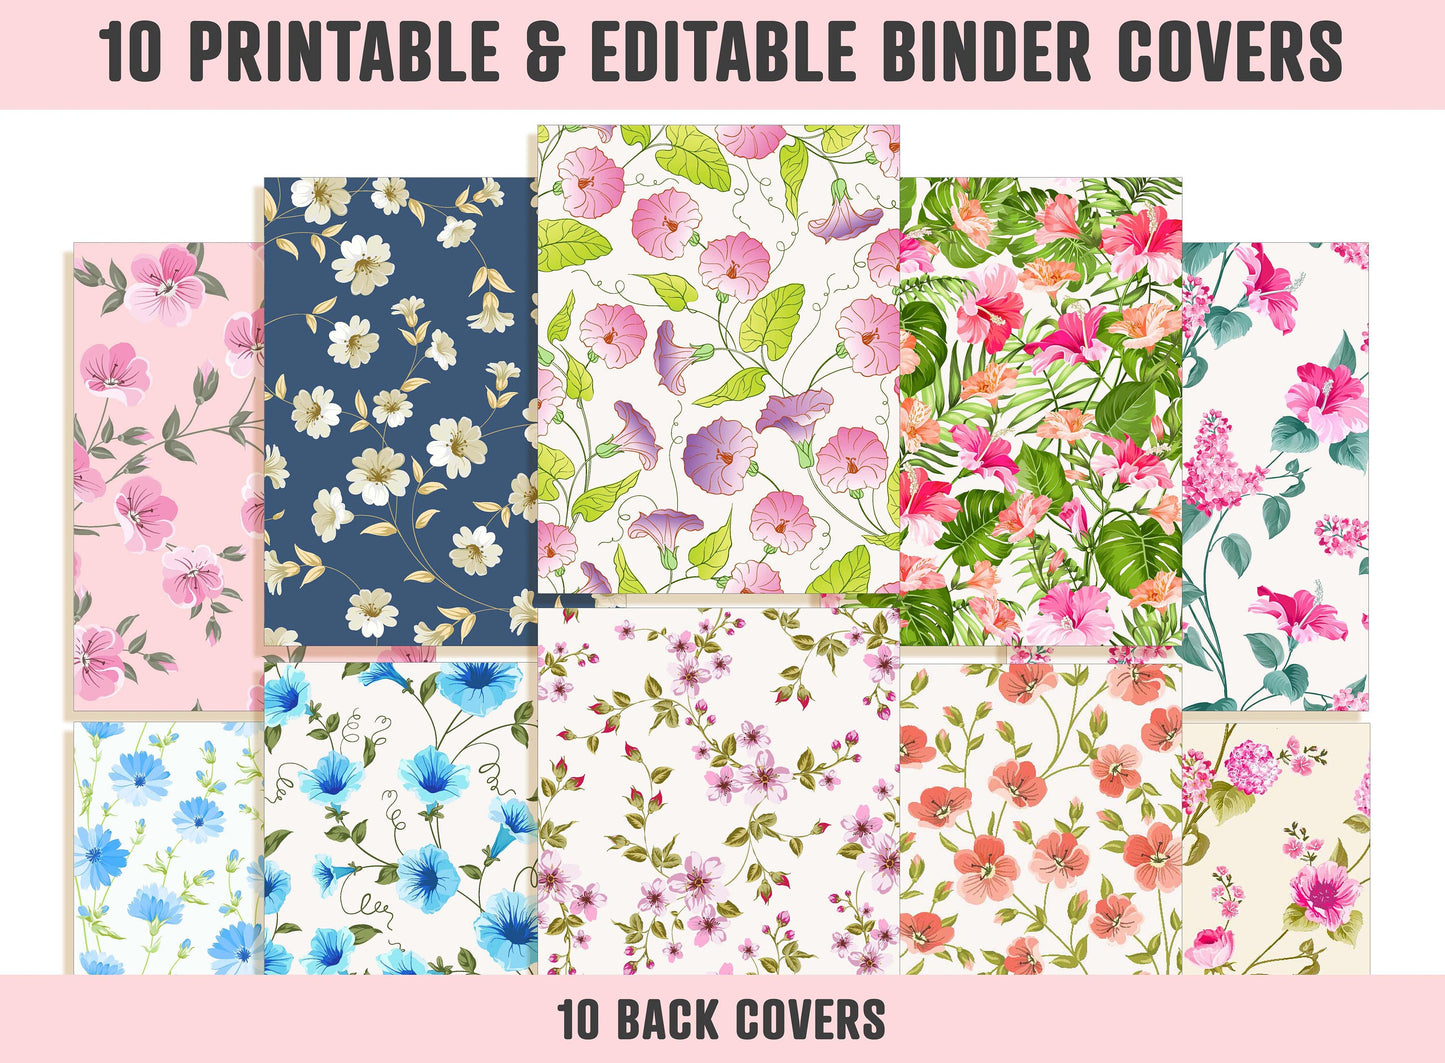 Planner Cover, 10 Printable & Editable Binder Covers+Spines, Teacher/School Binder Cover, Binder Inserts, Binder Template, Flower, Floral